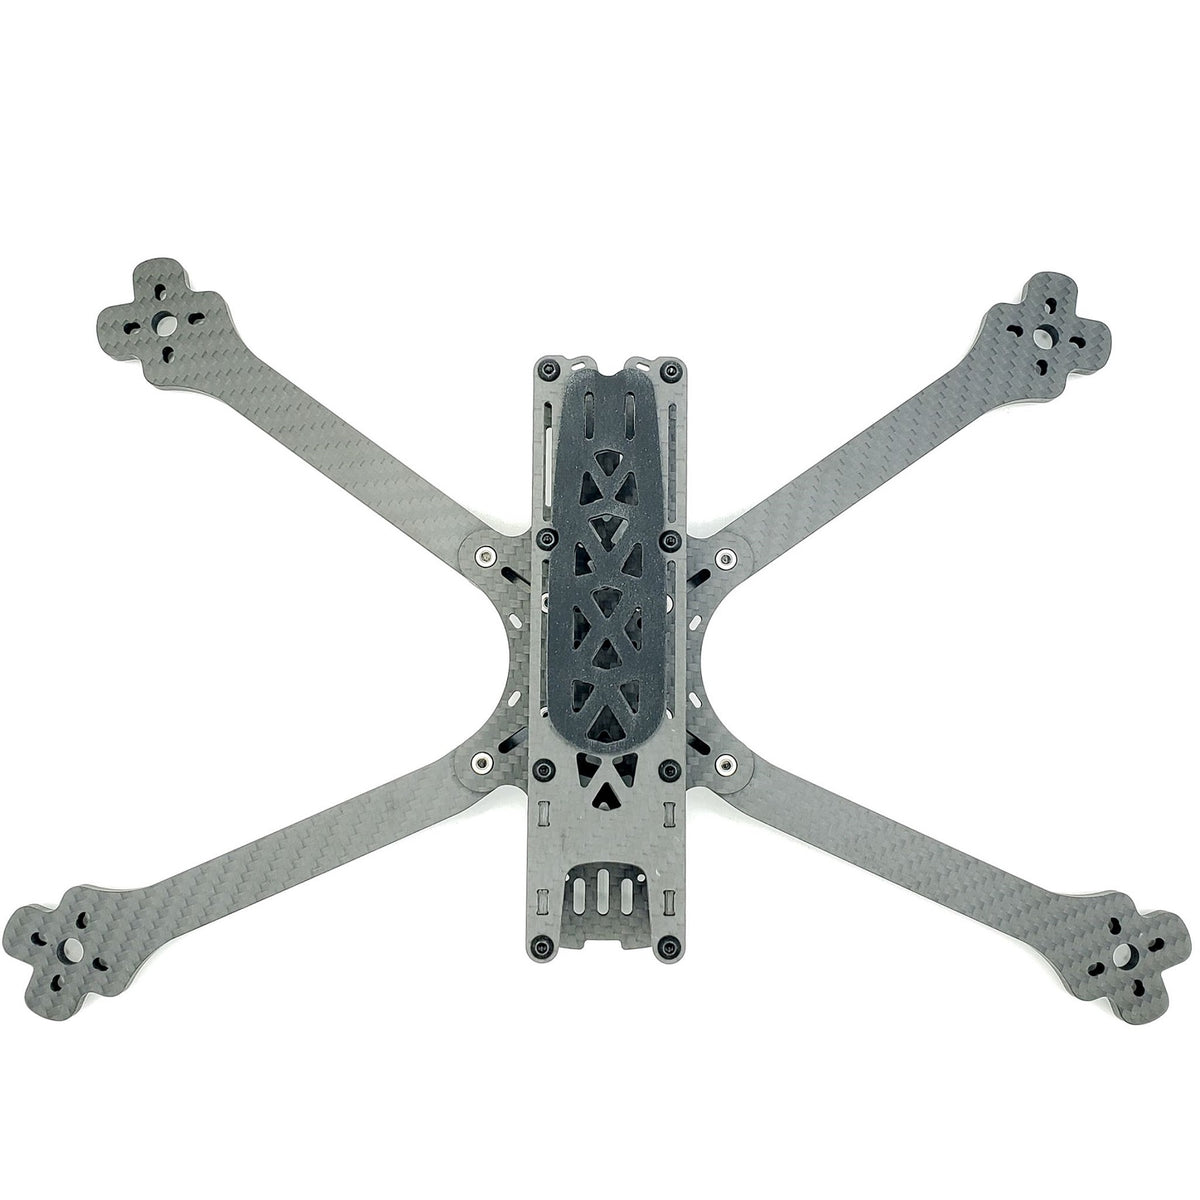 Shen Drones Terraplane Bigger Cinewhoop Frame 189mm with HQ 85mm Hexblades